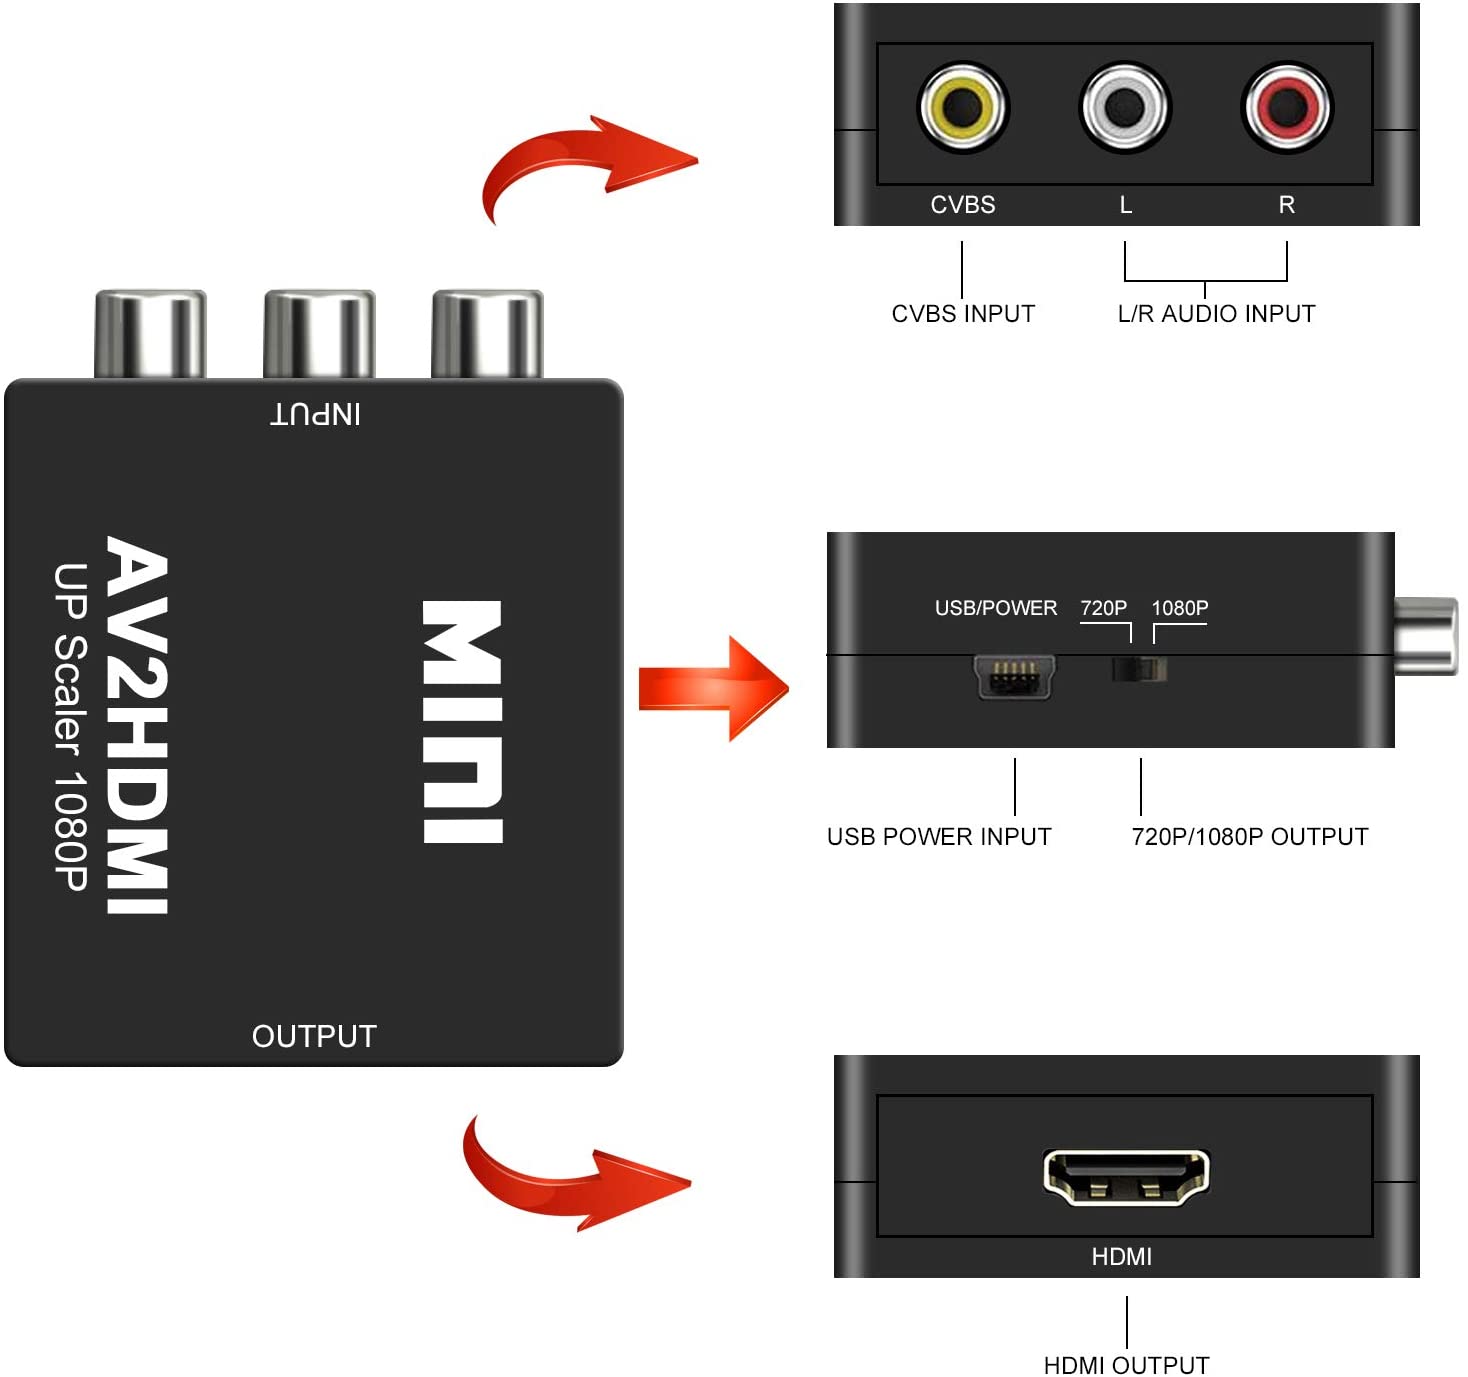 Adaptador Convertidor HDMI a RCA AV 1080p HD PAL/NTSC 